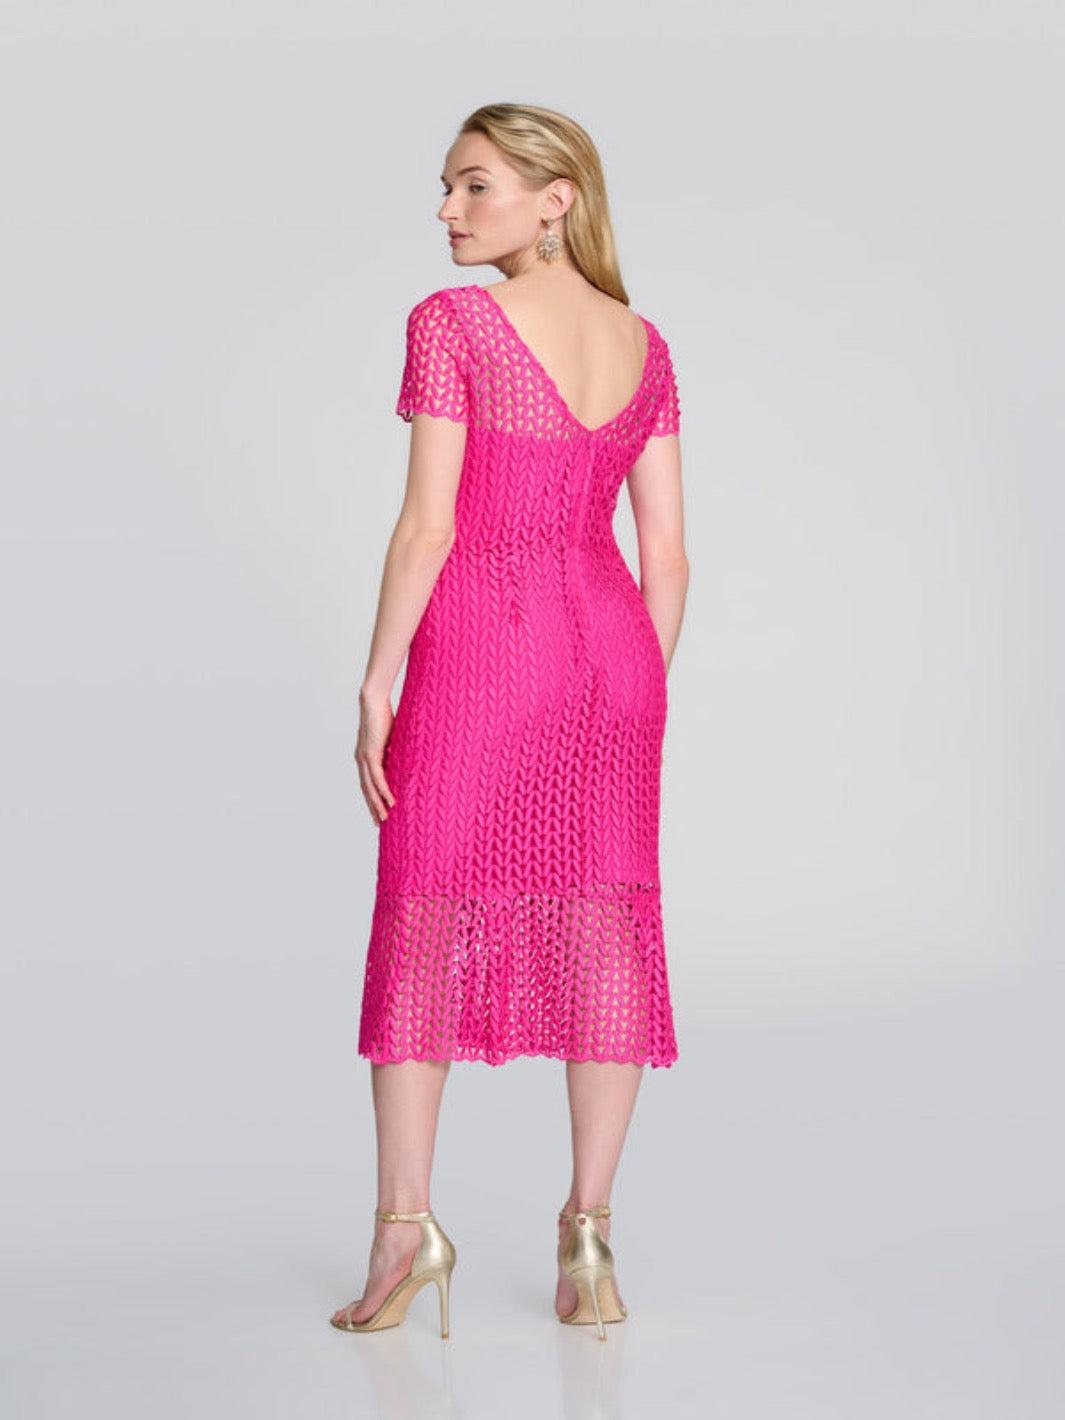 Joseph Ribkoff Chevron Lace Overlay Dress In Pink 242704-Nicola Ross